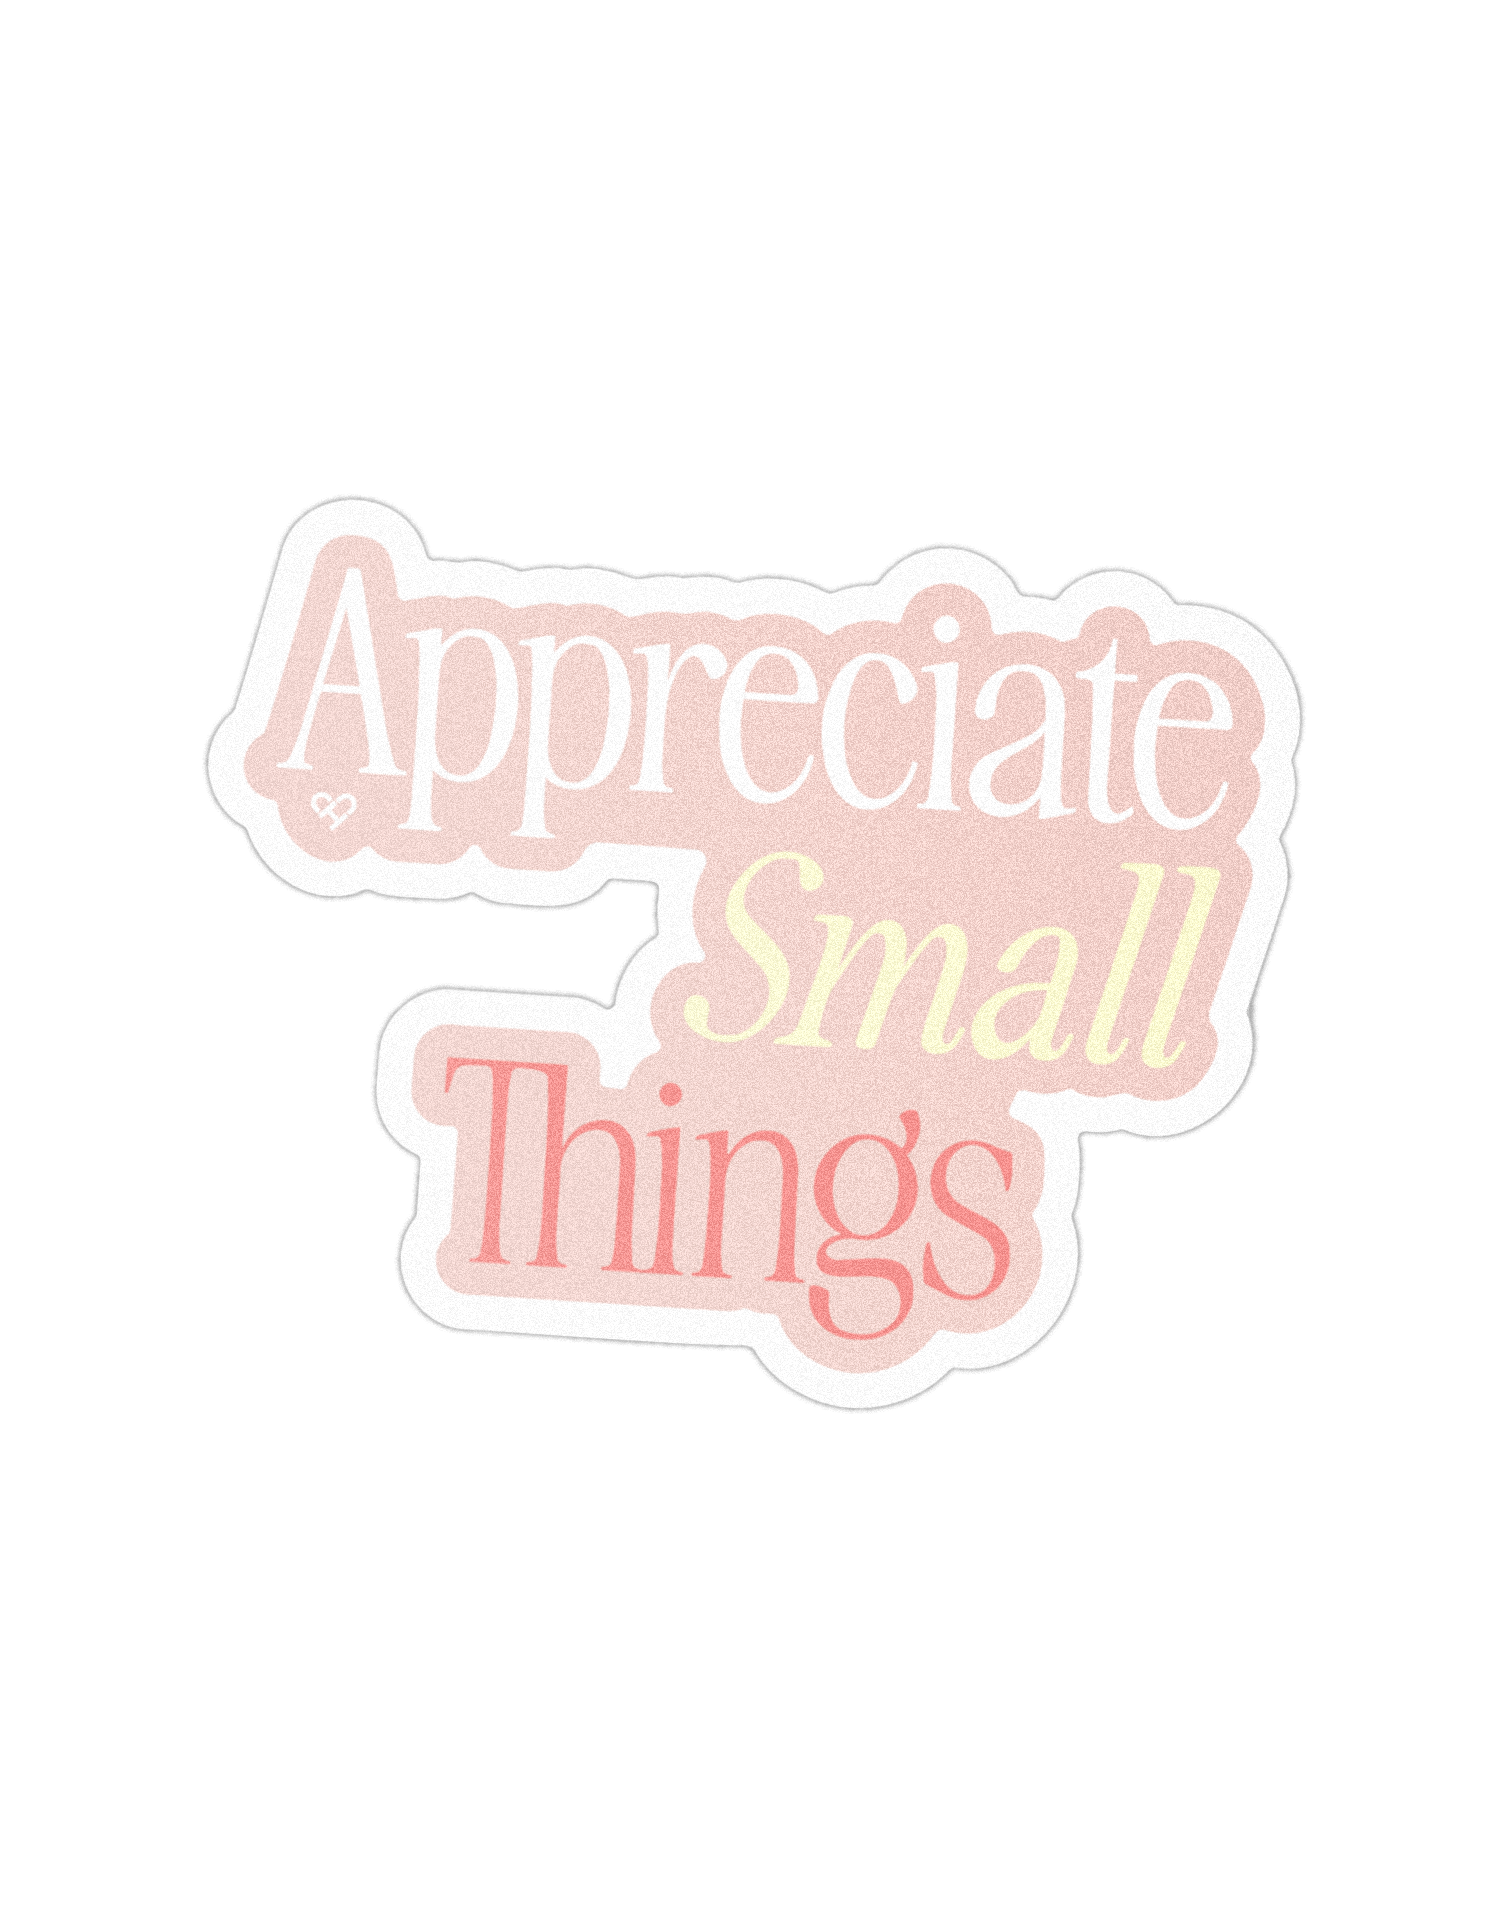 Appreciate Small Things Sticker